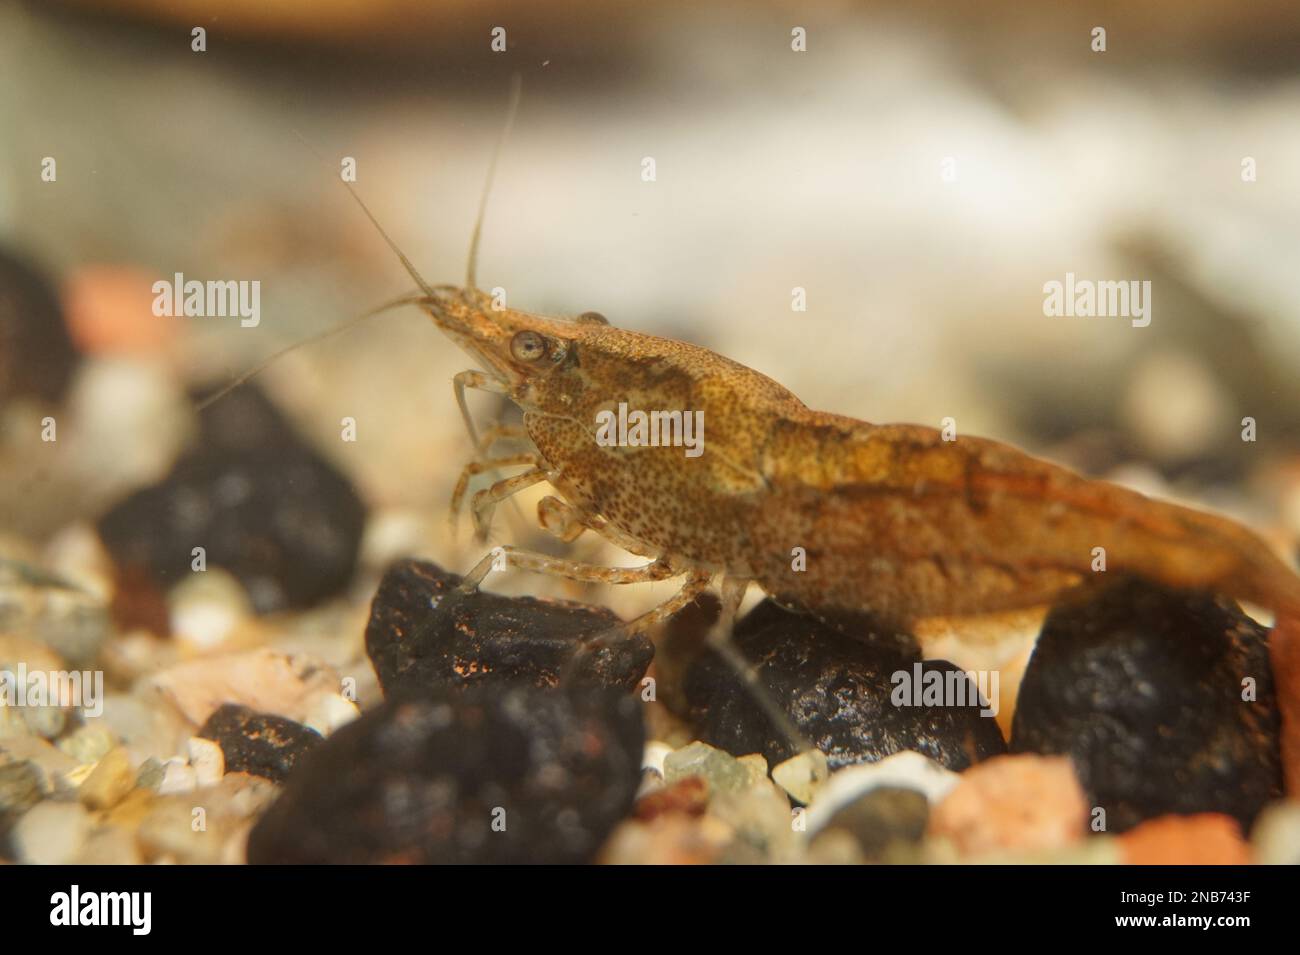 A closeup of a small neocaridina shrimp in an aquarium Stock Photo